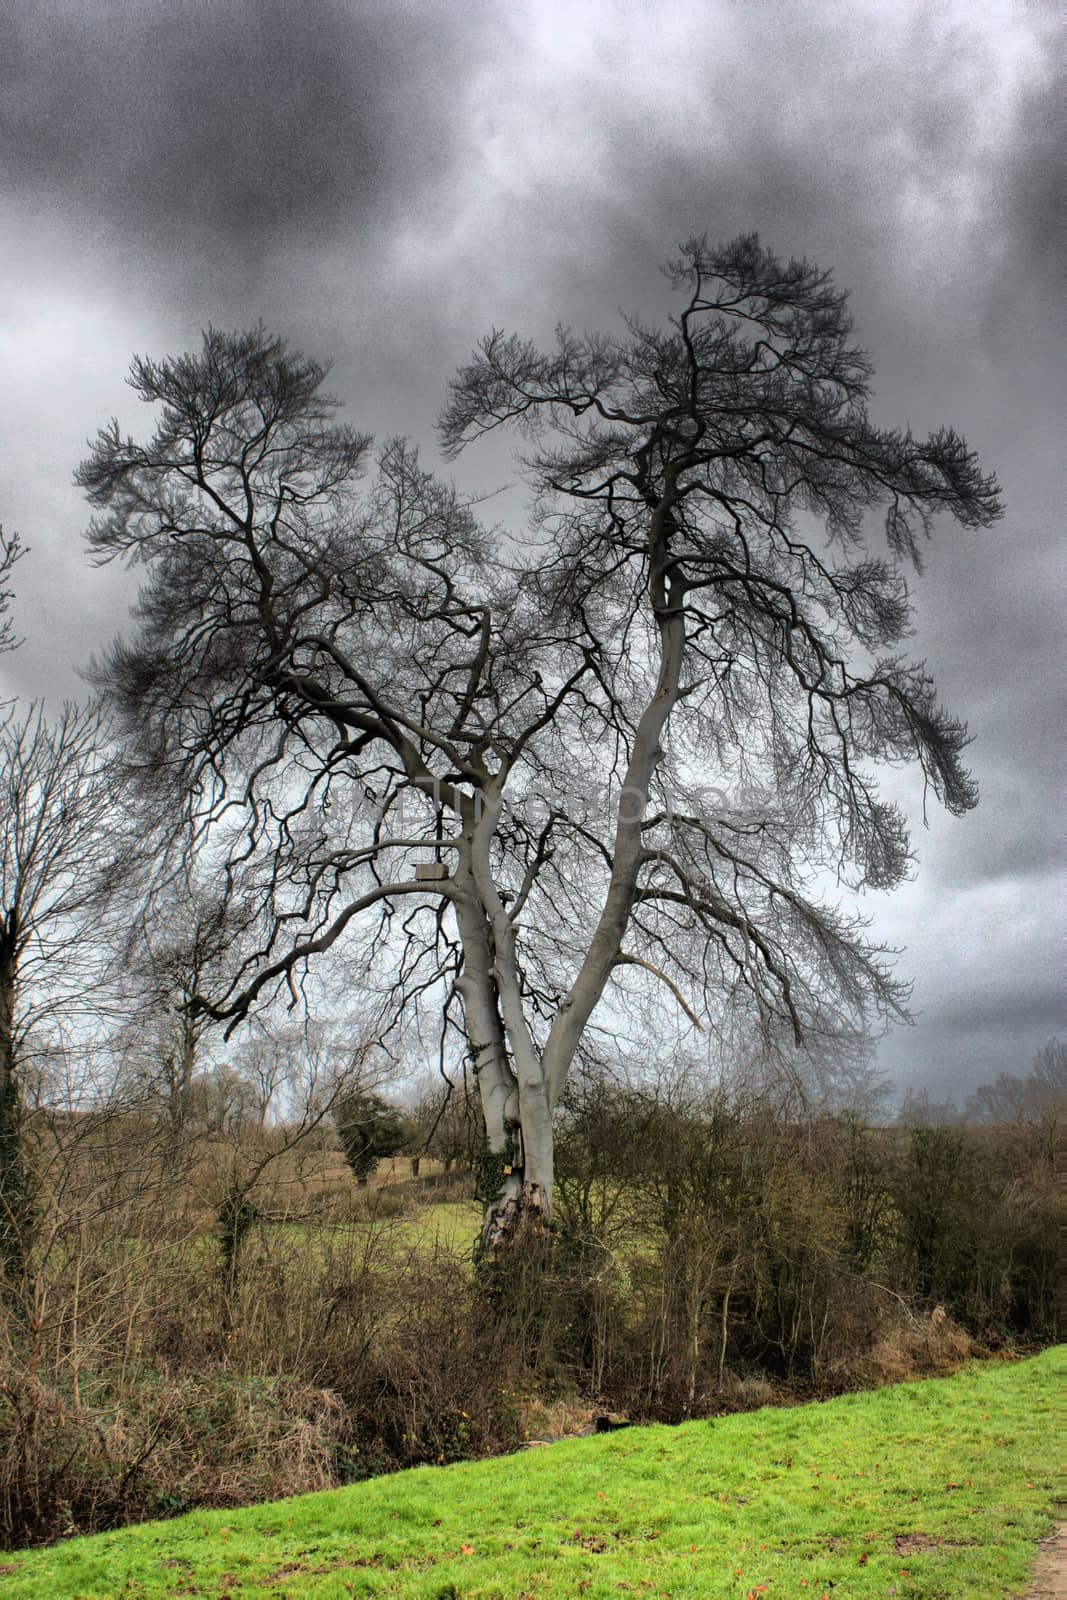 dead tree silhouette against a dark grey cloudy sky